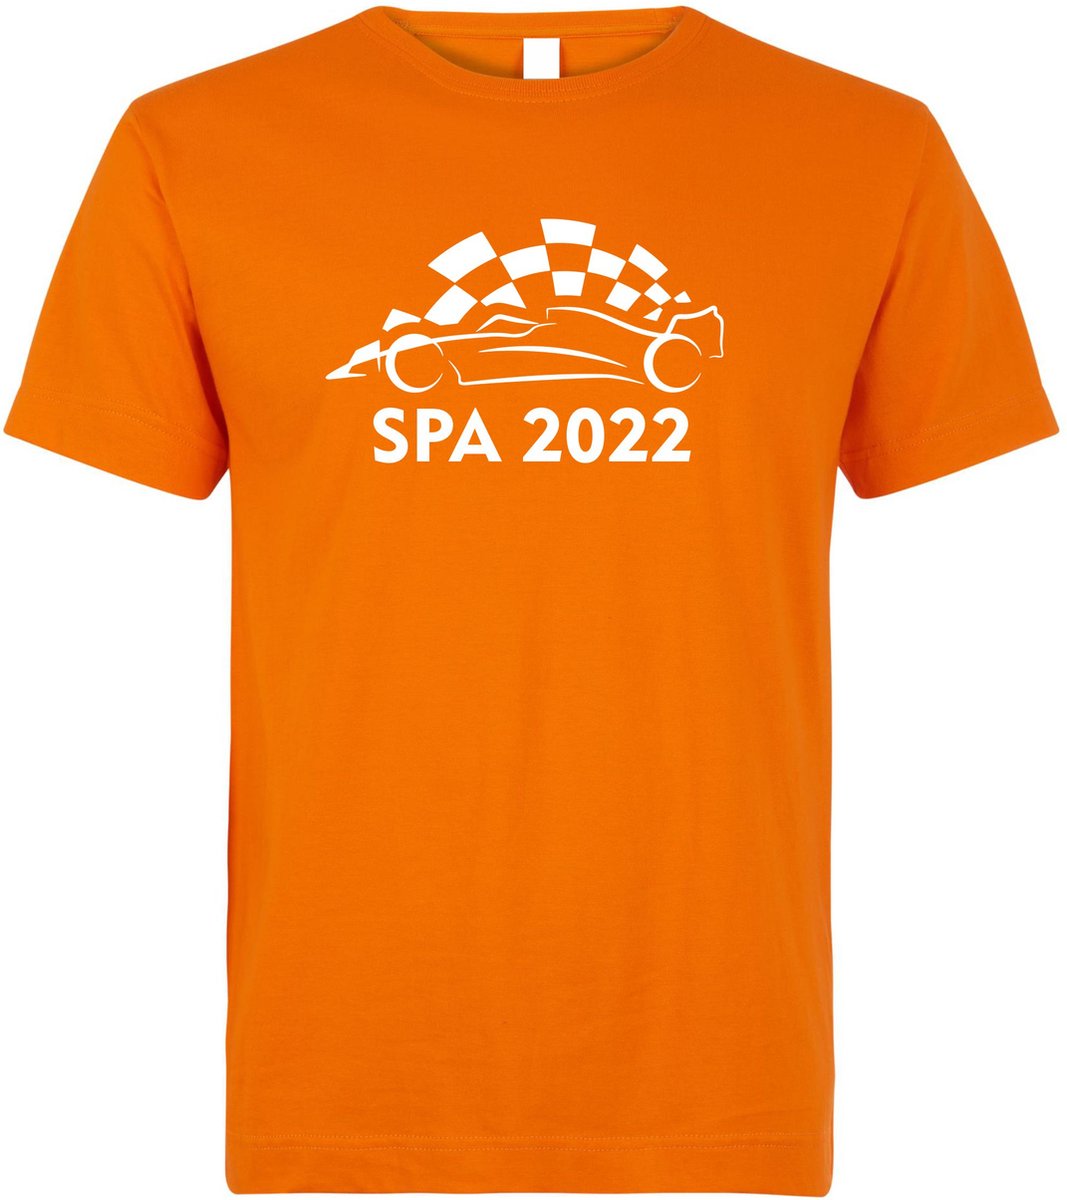 T-shirt Spa 2022 met raceauto | Max Verstappen / Red Bull Racing / Formule 1 fan | Grand Prix Circuit Spa-Francorchamps | kleding shirt | Oranje | maat 4XL